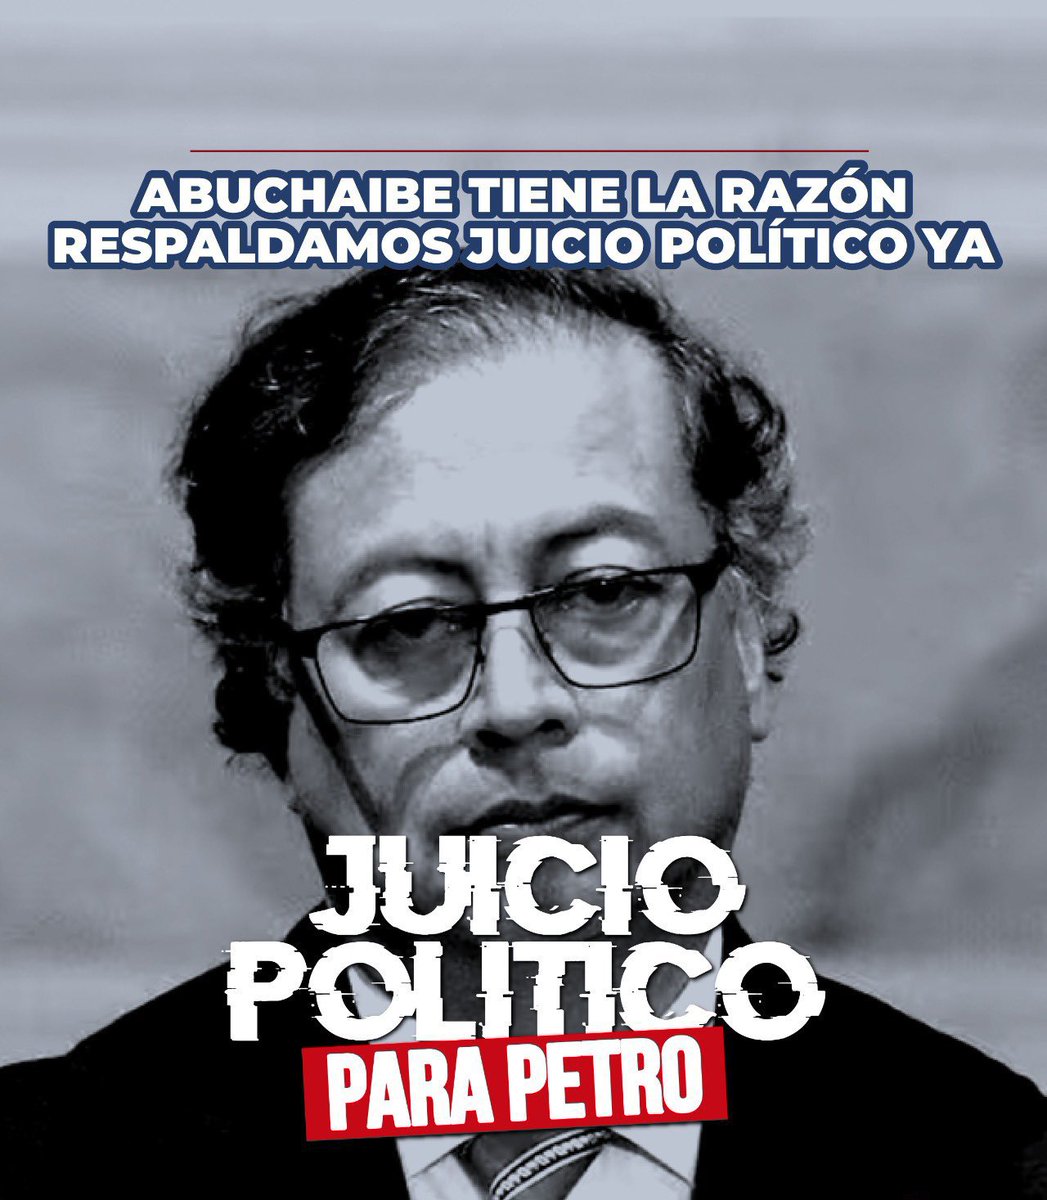 FUERA PETRO!
#FueraPetro
#PetroCriminalDeLesaHumanidad 
#PetroEsUnaPlaga 
#PetroIlegitimo 
#PetroMereceDestitución 
#PetroNarcoDictador 
#PetroNoEsColombia 
#PetroRenuncieYa